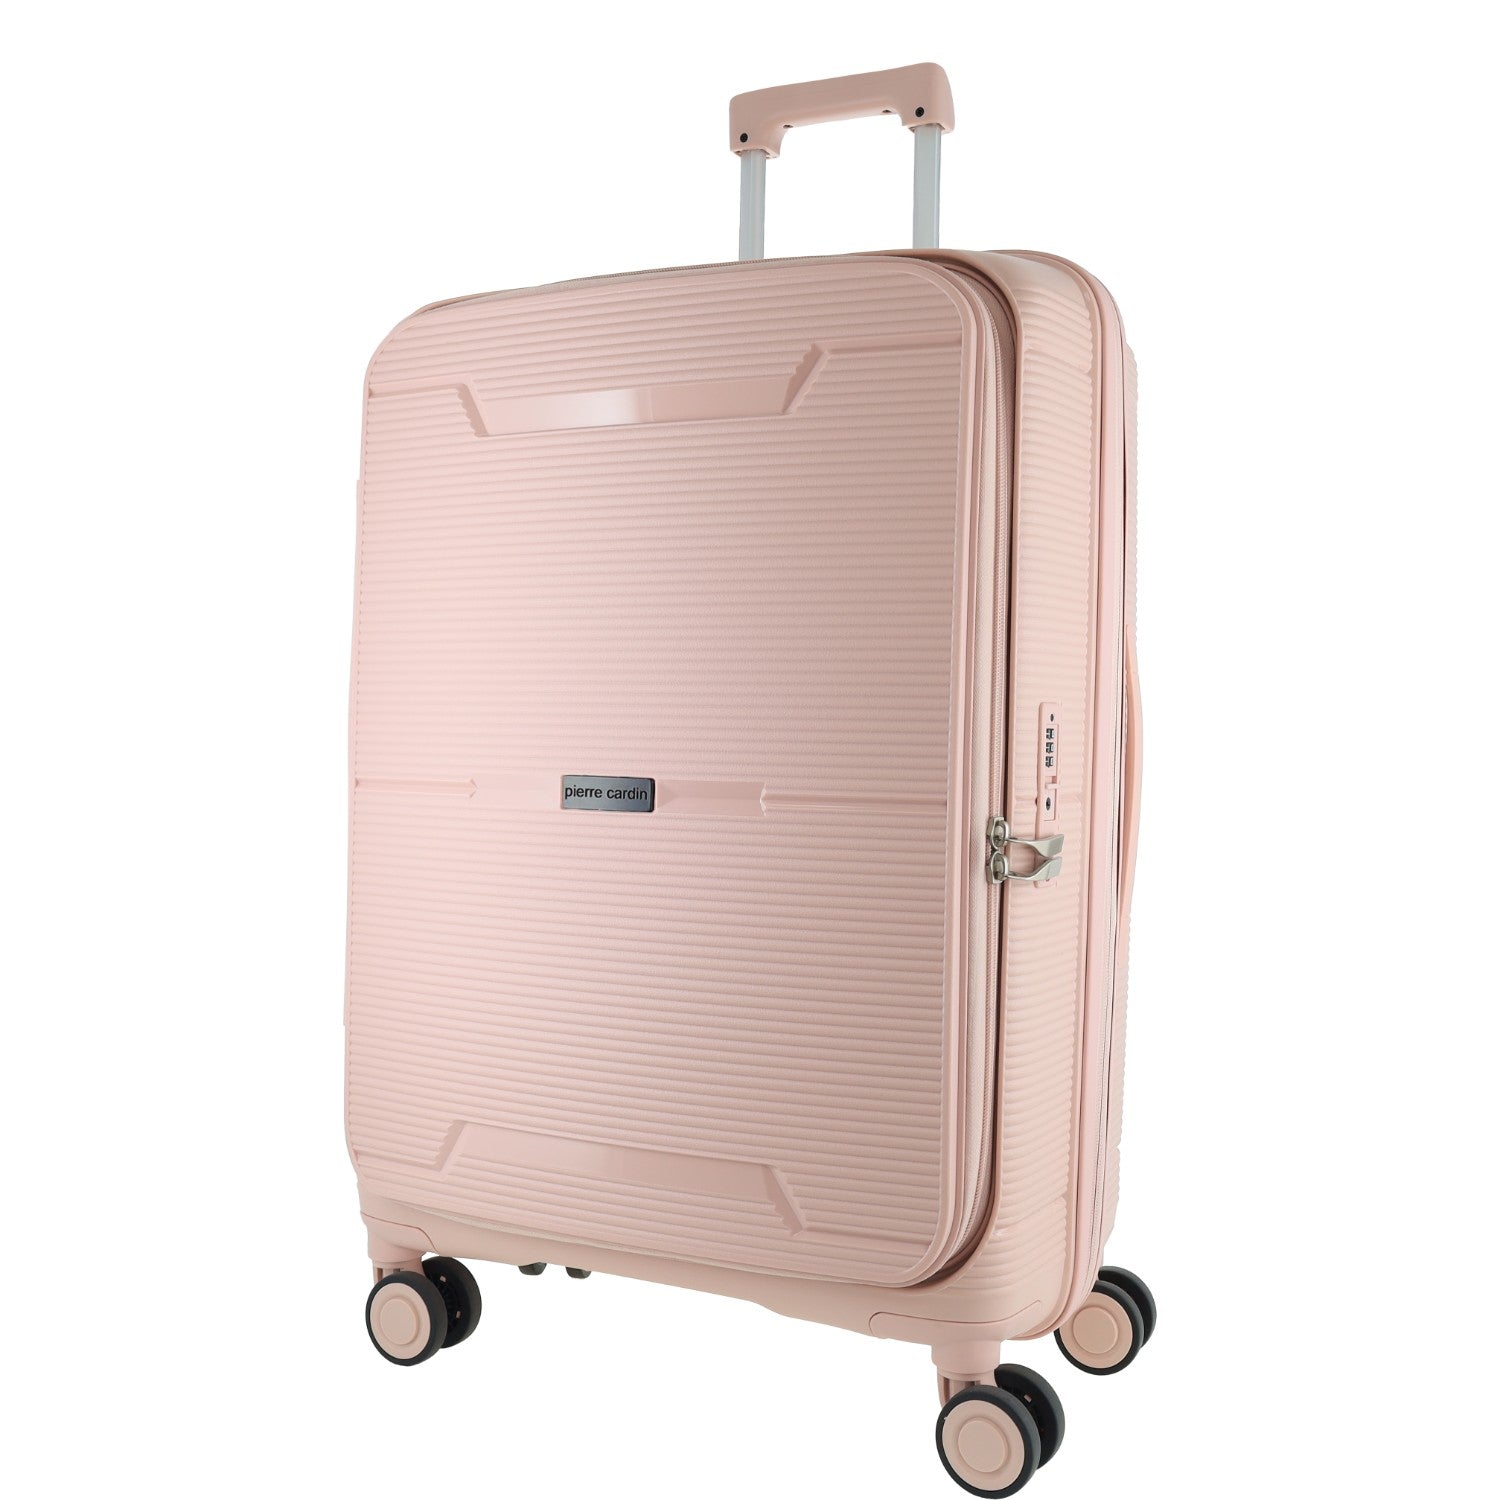 Pierre Cardin - PC3939M 69cm Medium Hard Shell Suitcase - Blush-1